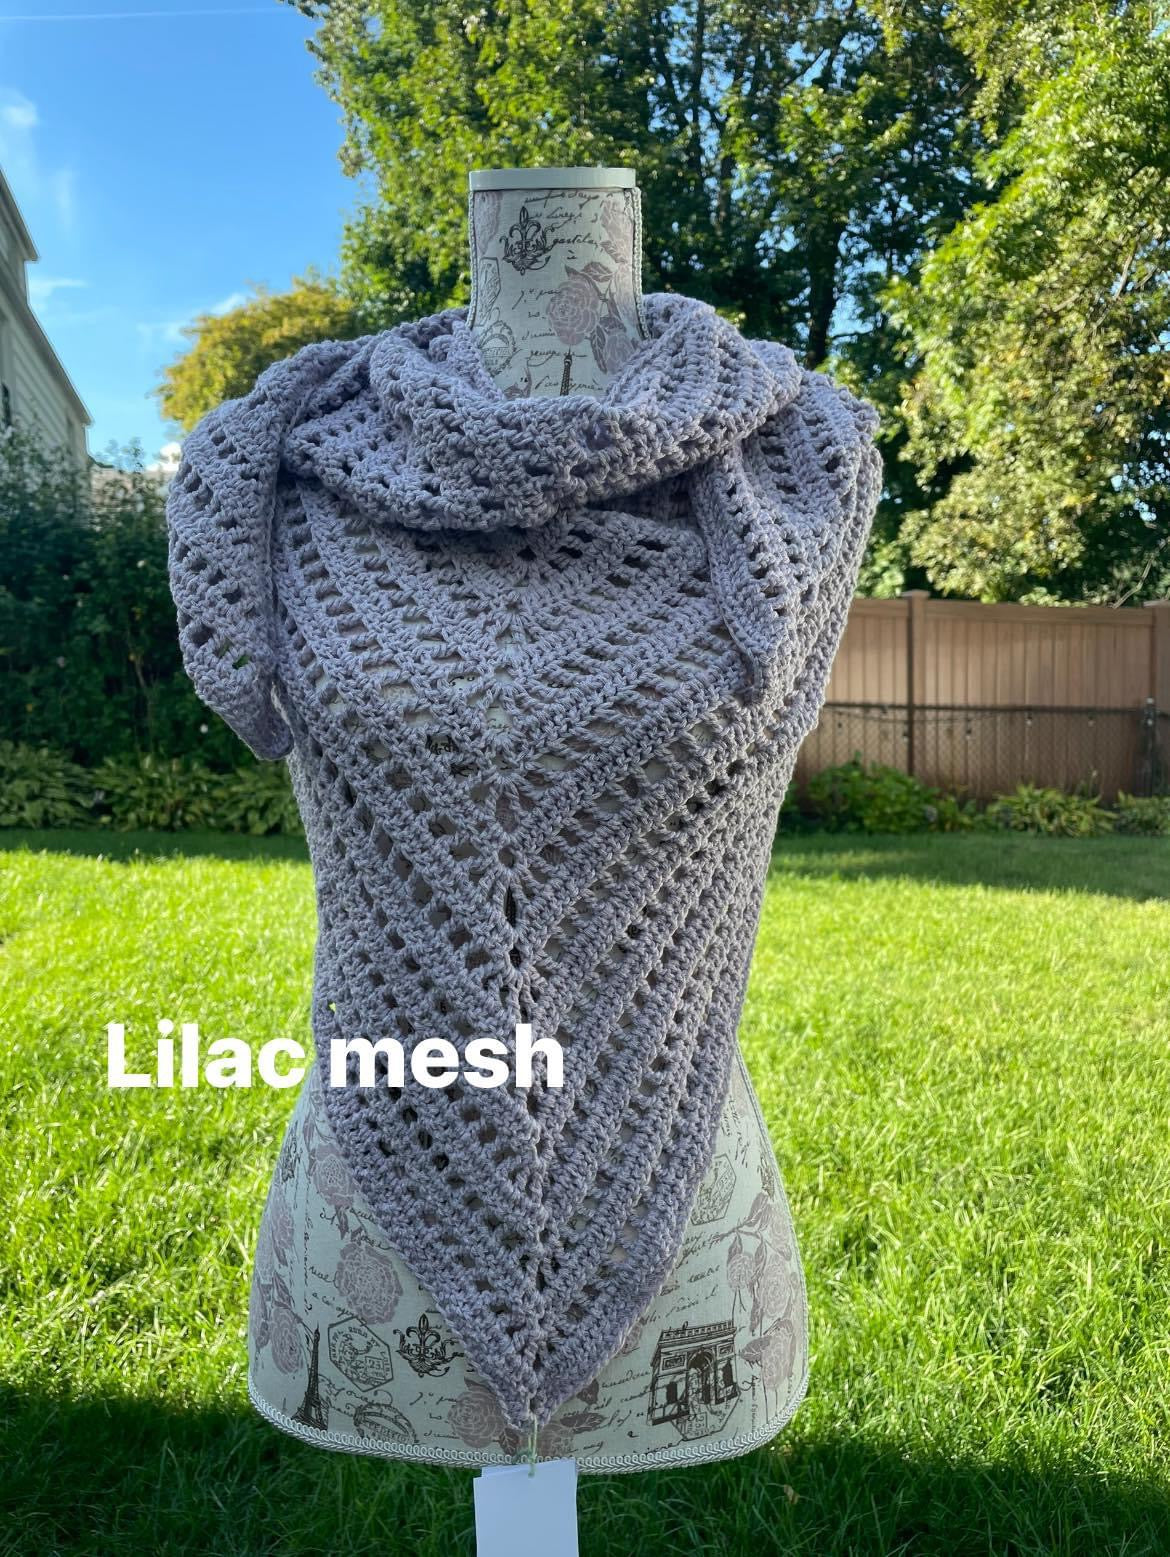 Crochet cotton shawl